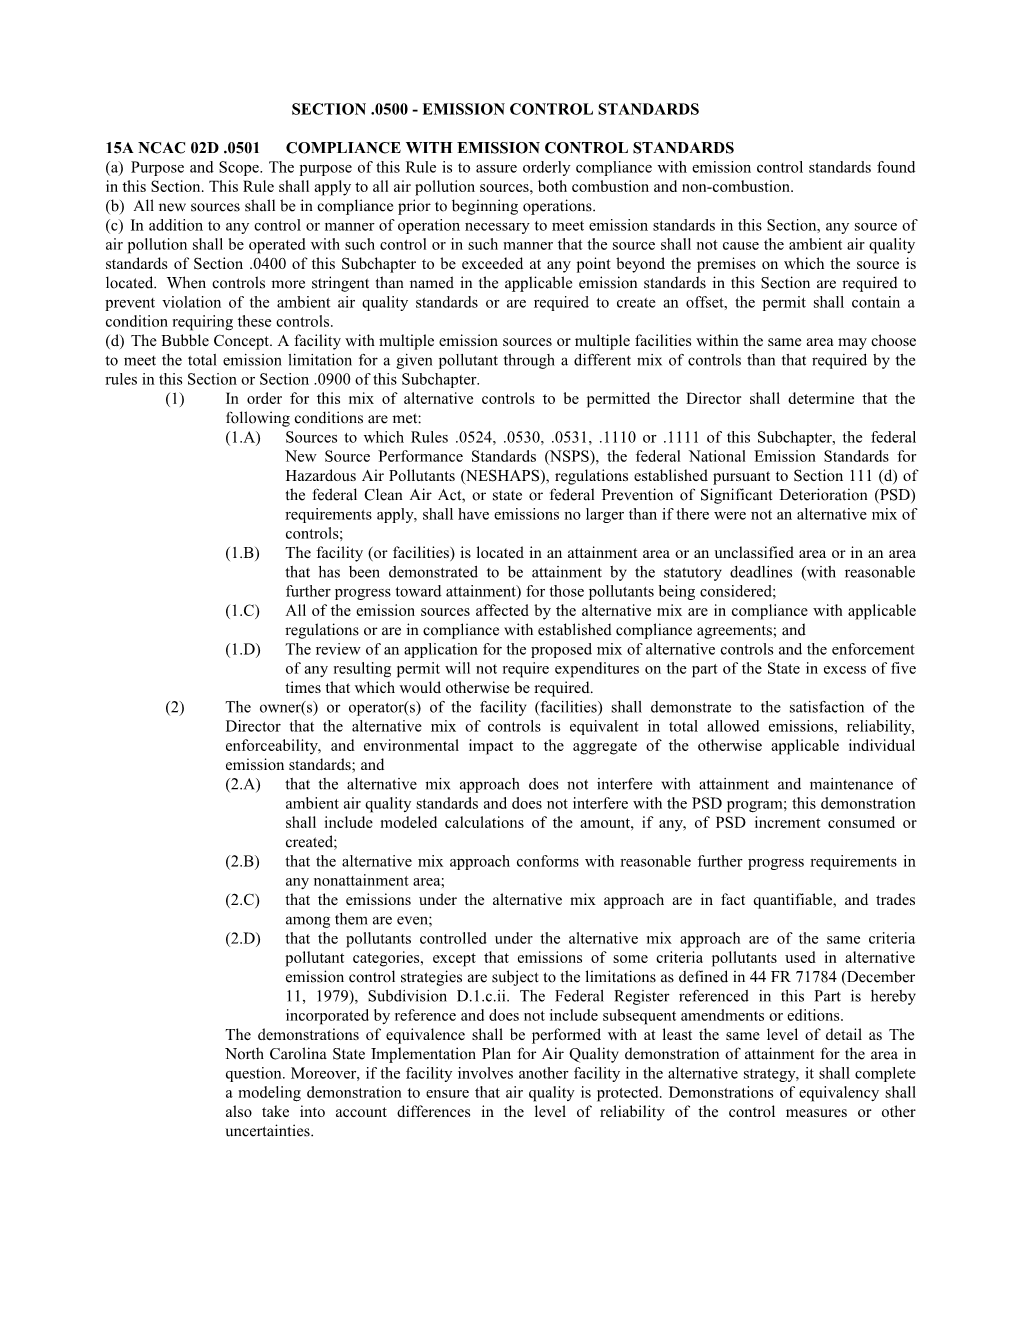 Section .0500 - Emission Control Standards